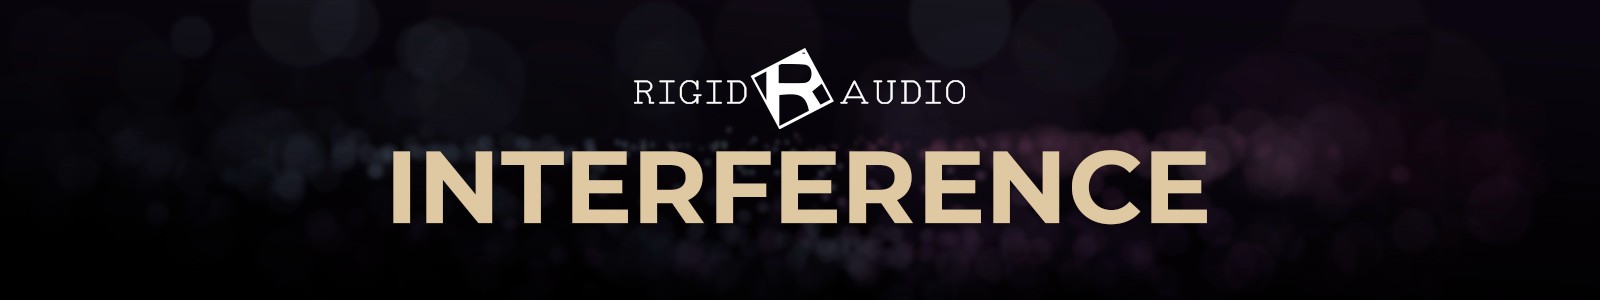 Rigid Audio Interference